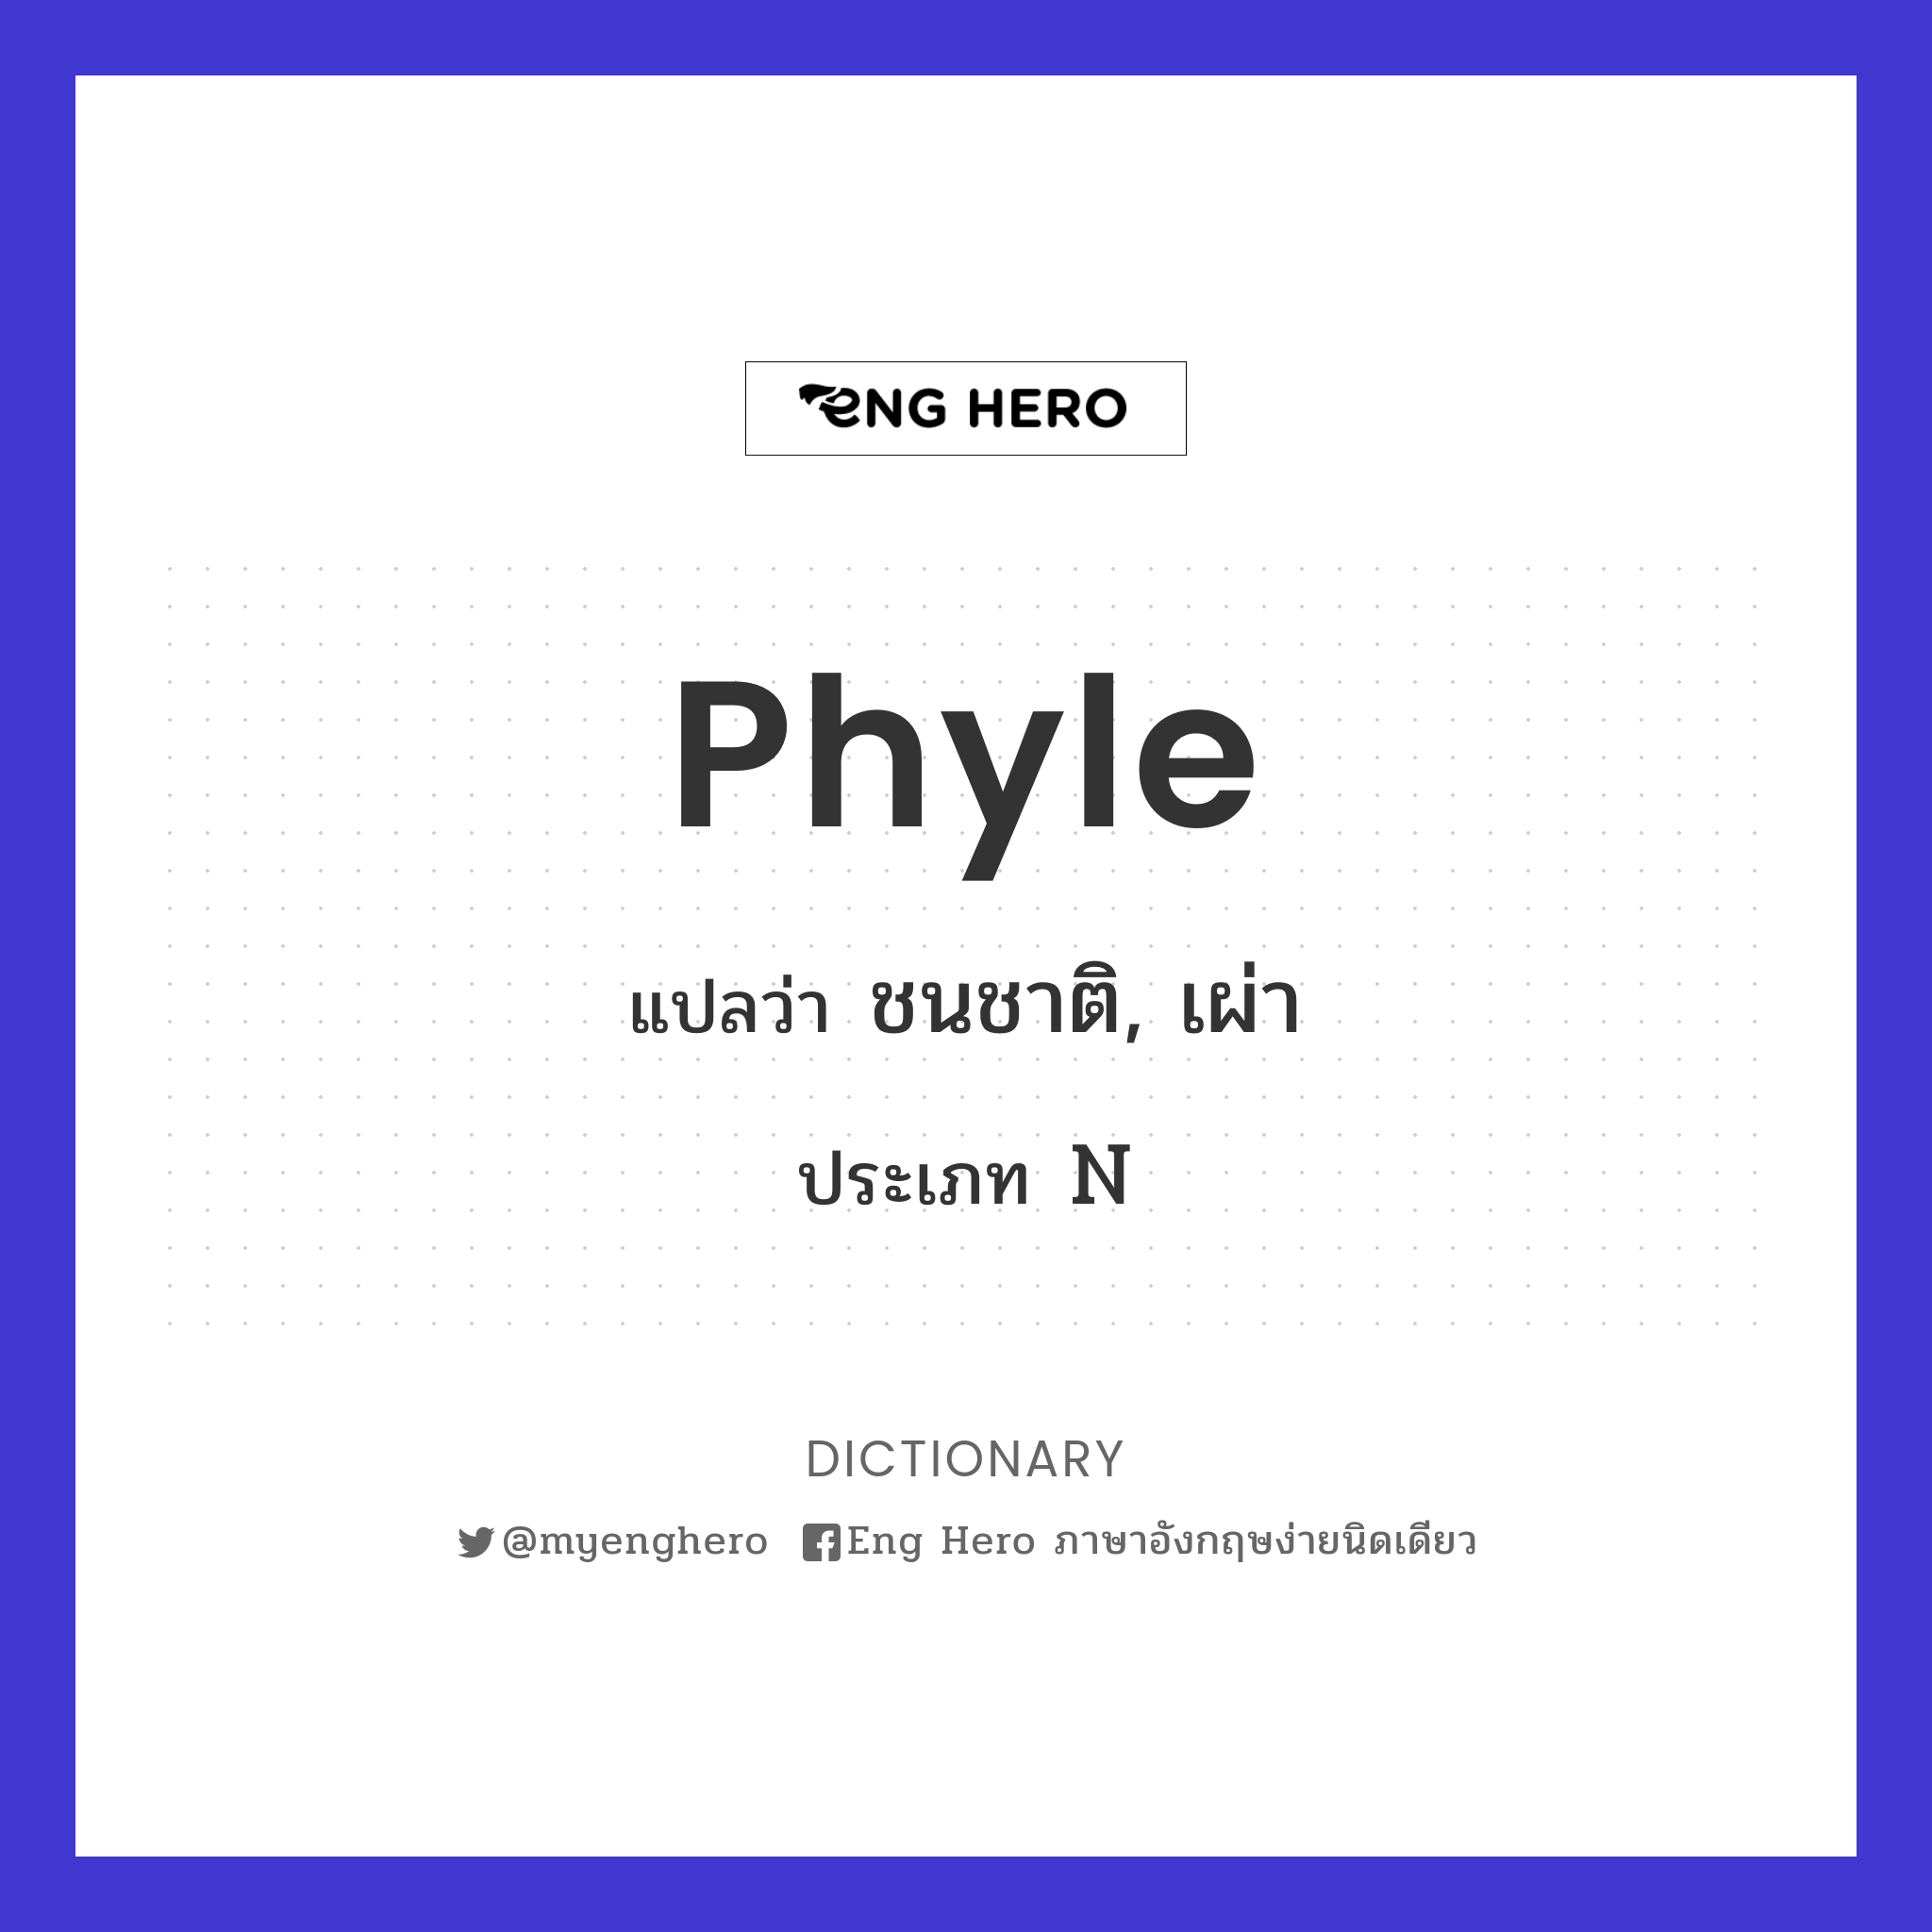 phyle